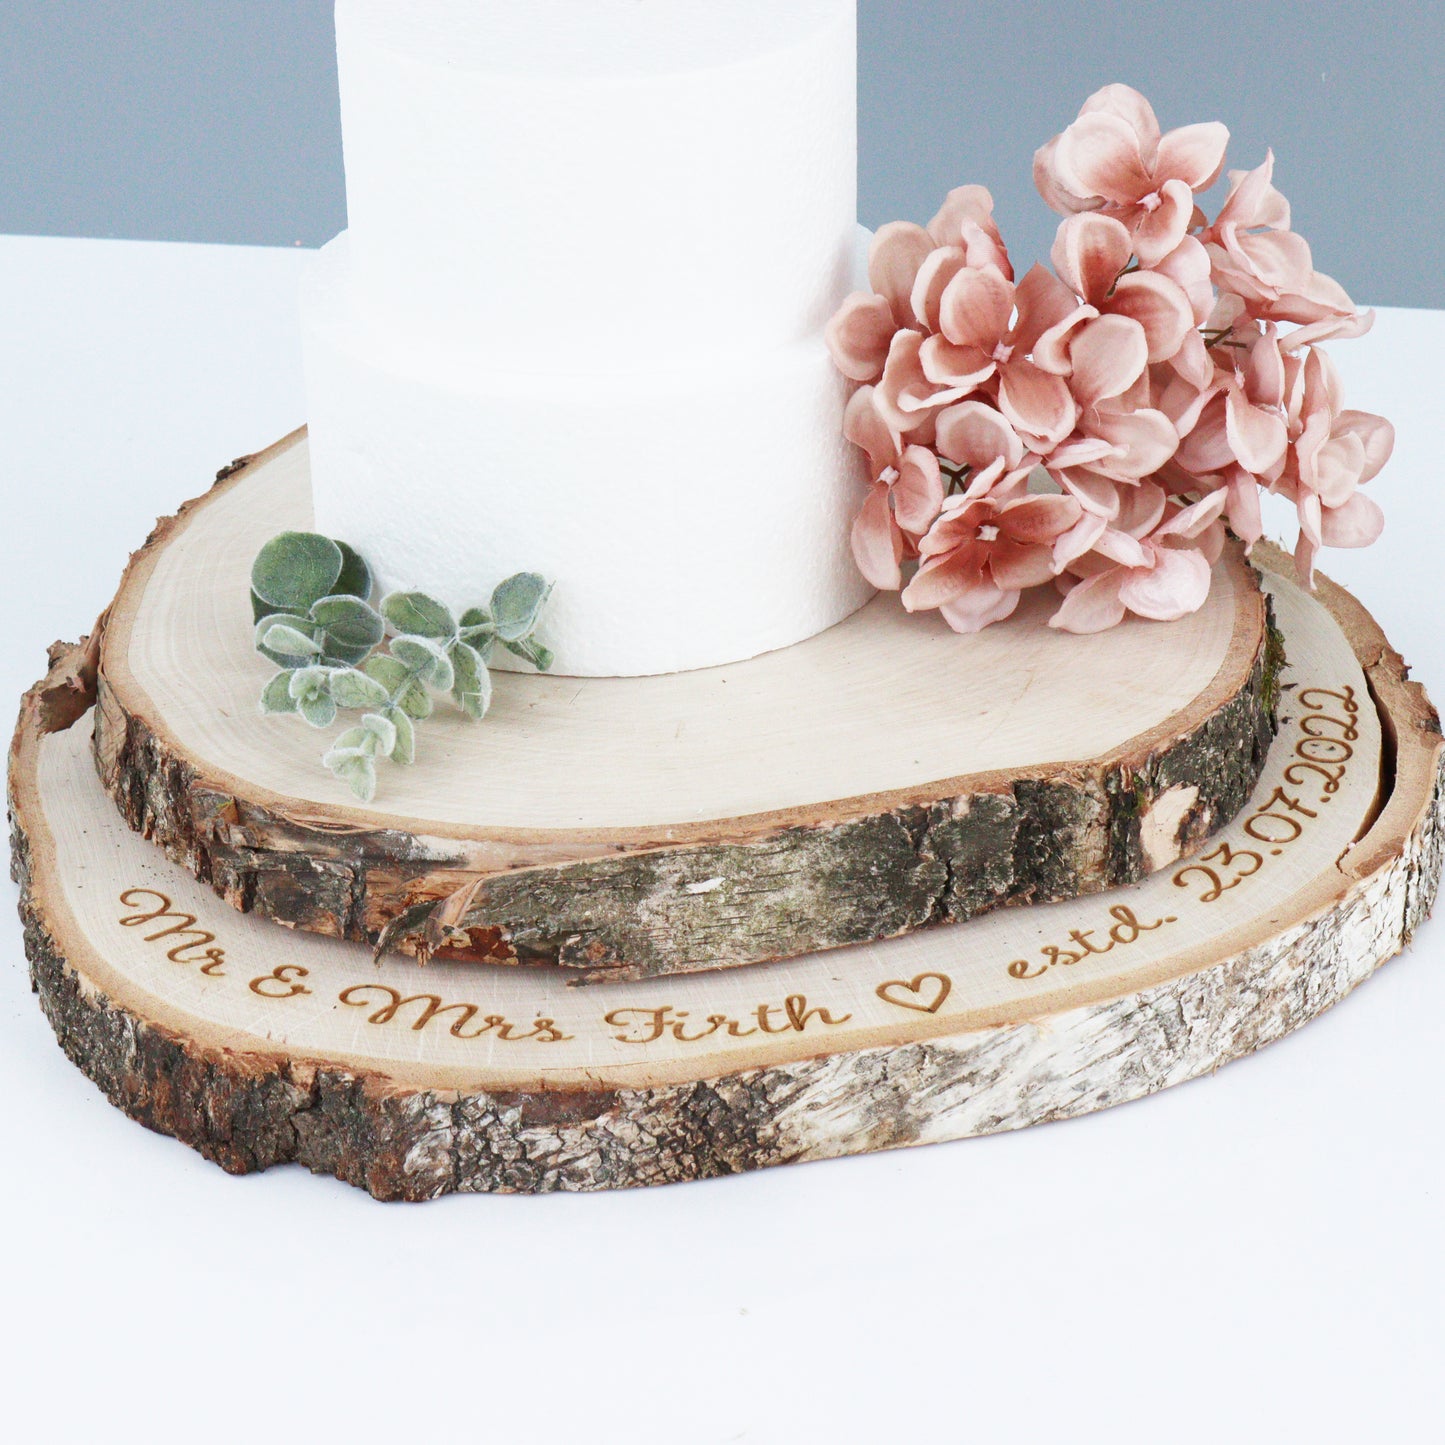 Personalised Natural Birch Log Cake Stand